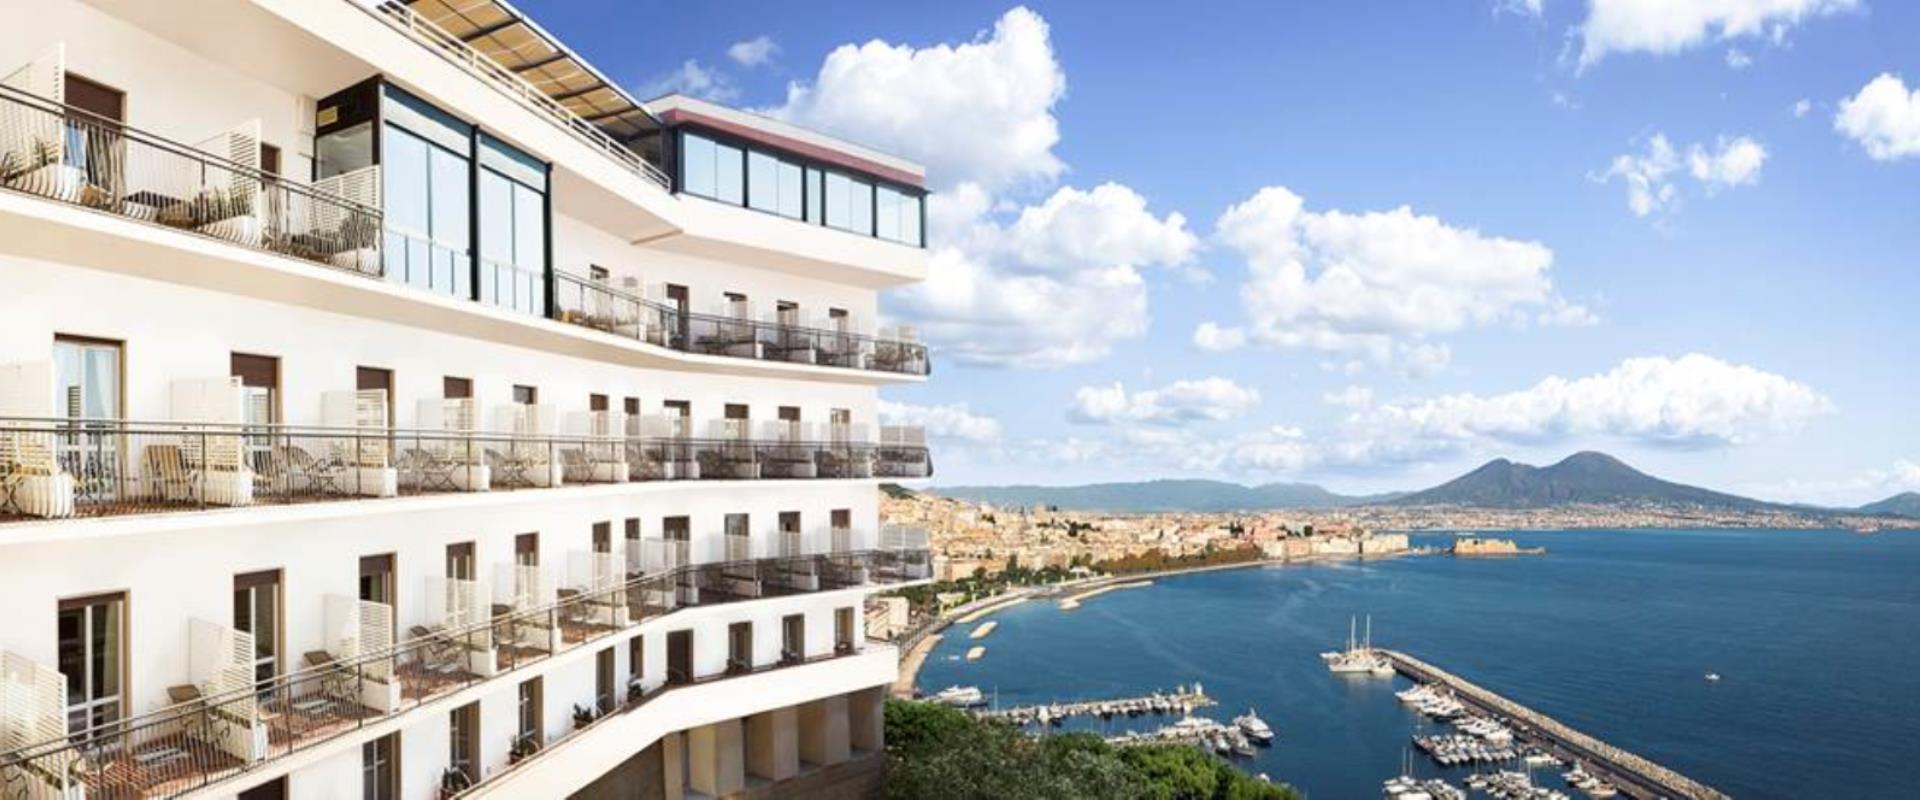 Hotel Paradiso Naples. View of the Bay of Naples Posillipo hotel